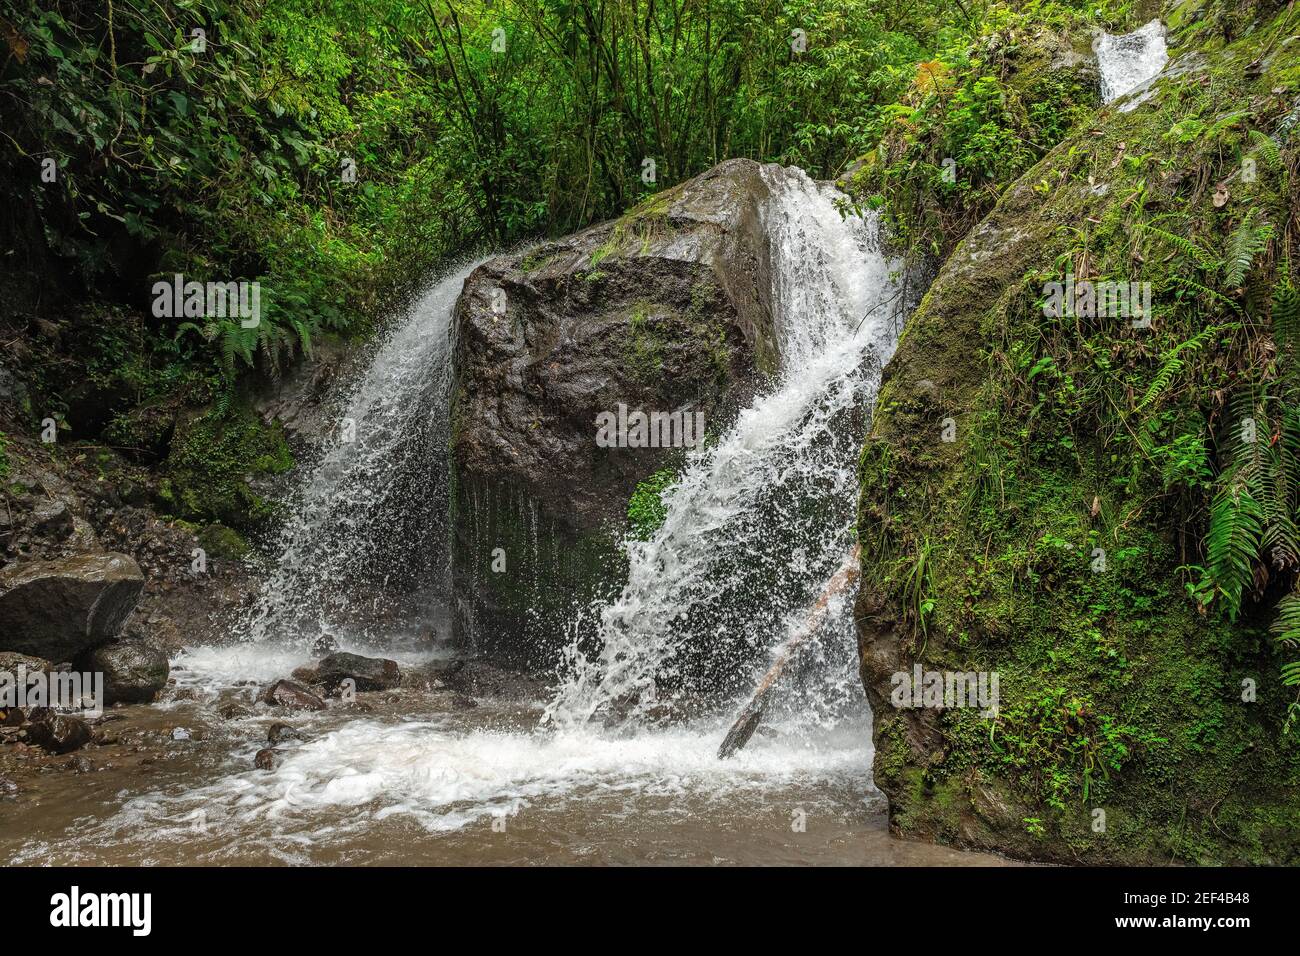 Largest waterfall in Los Cuchos in Atahualpa village near Quito, Ecuador. Stock Photo